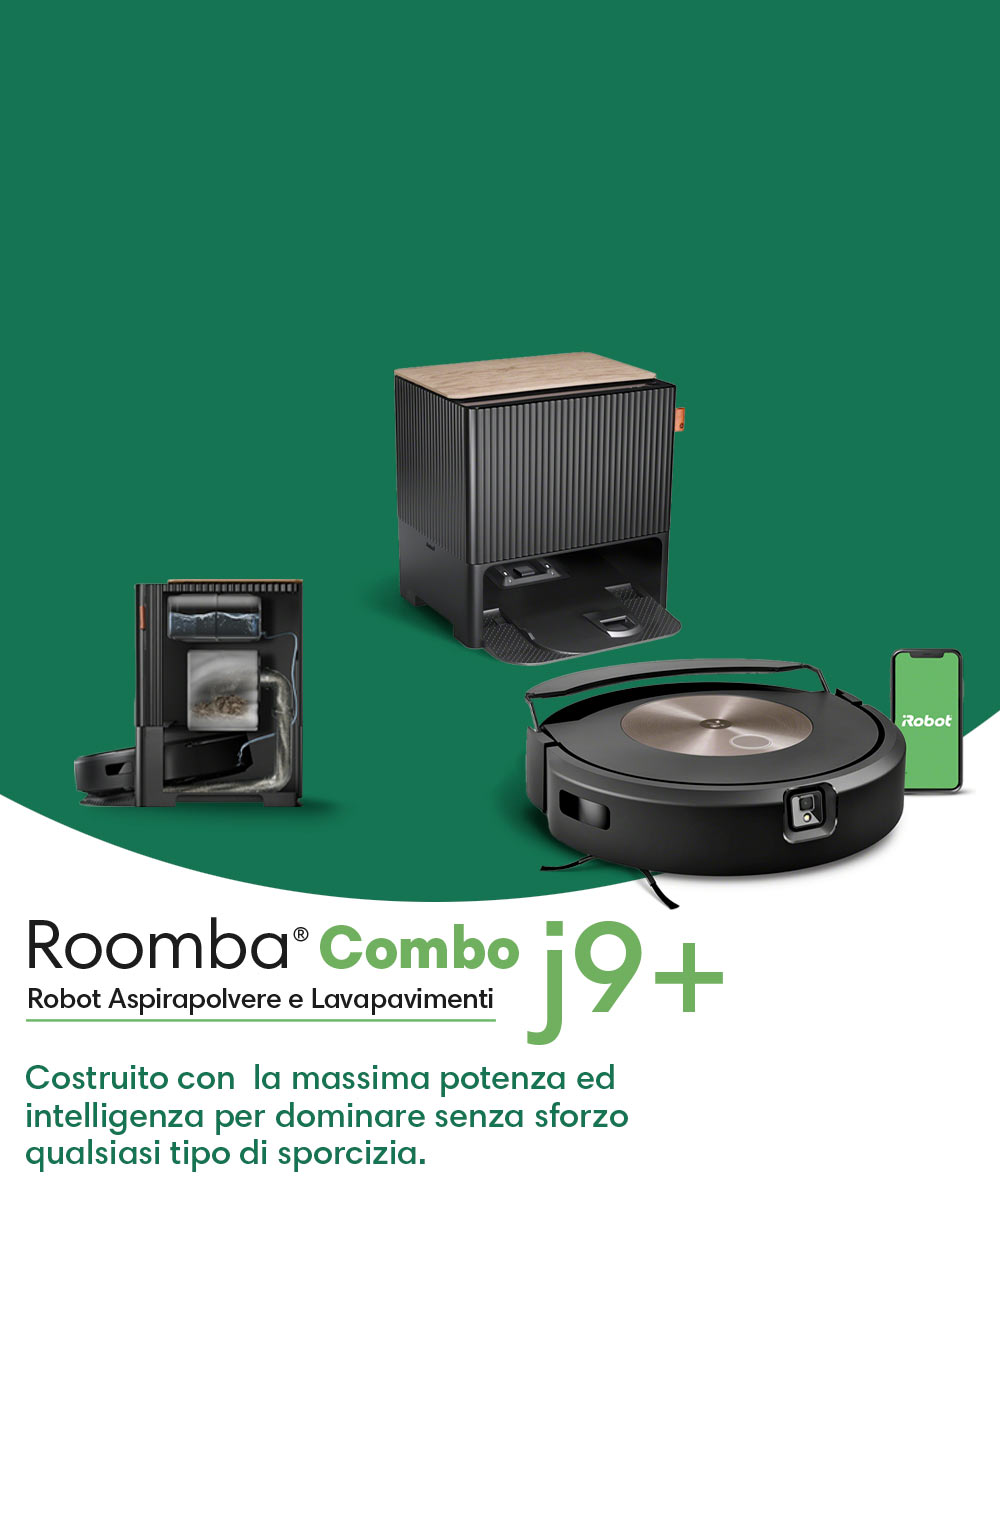 Roomba-Coombo-J9plus-HeroCategoryPage-2880x1050.jpg-okk.jpg